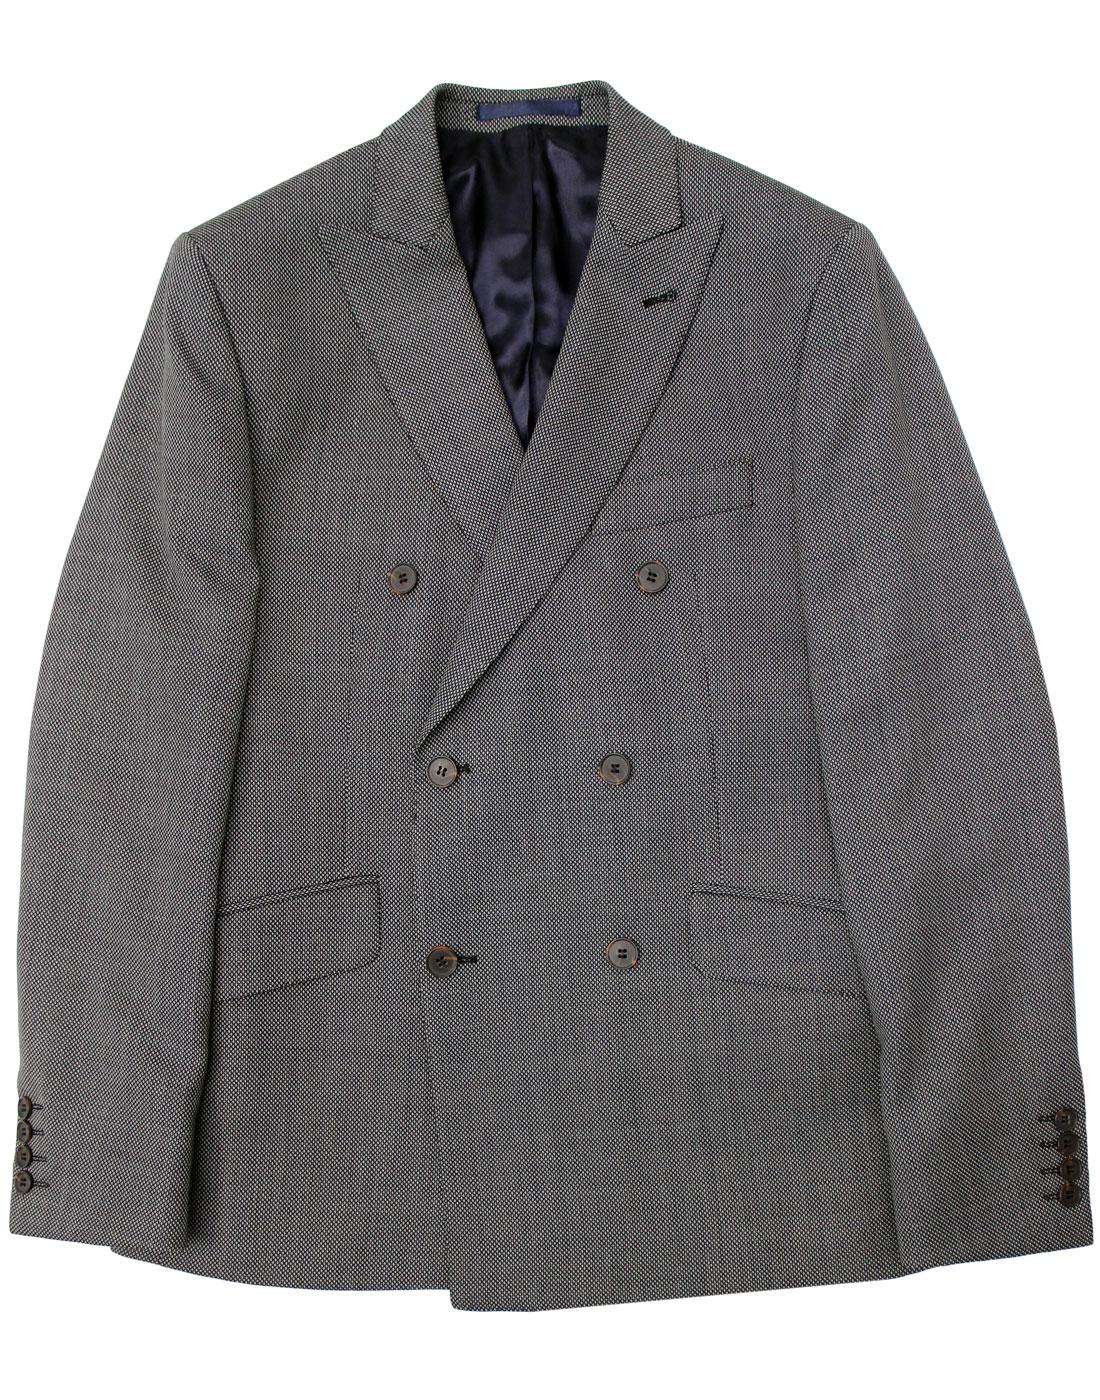 Men's Retro 1960s Mod Birdseye Check Double Breasted Suit Jacket